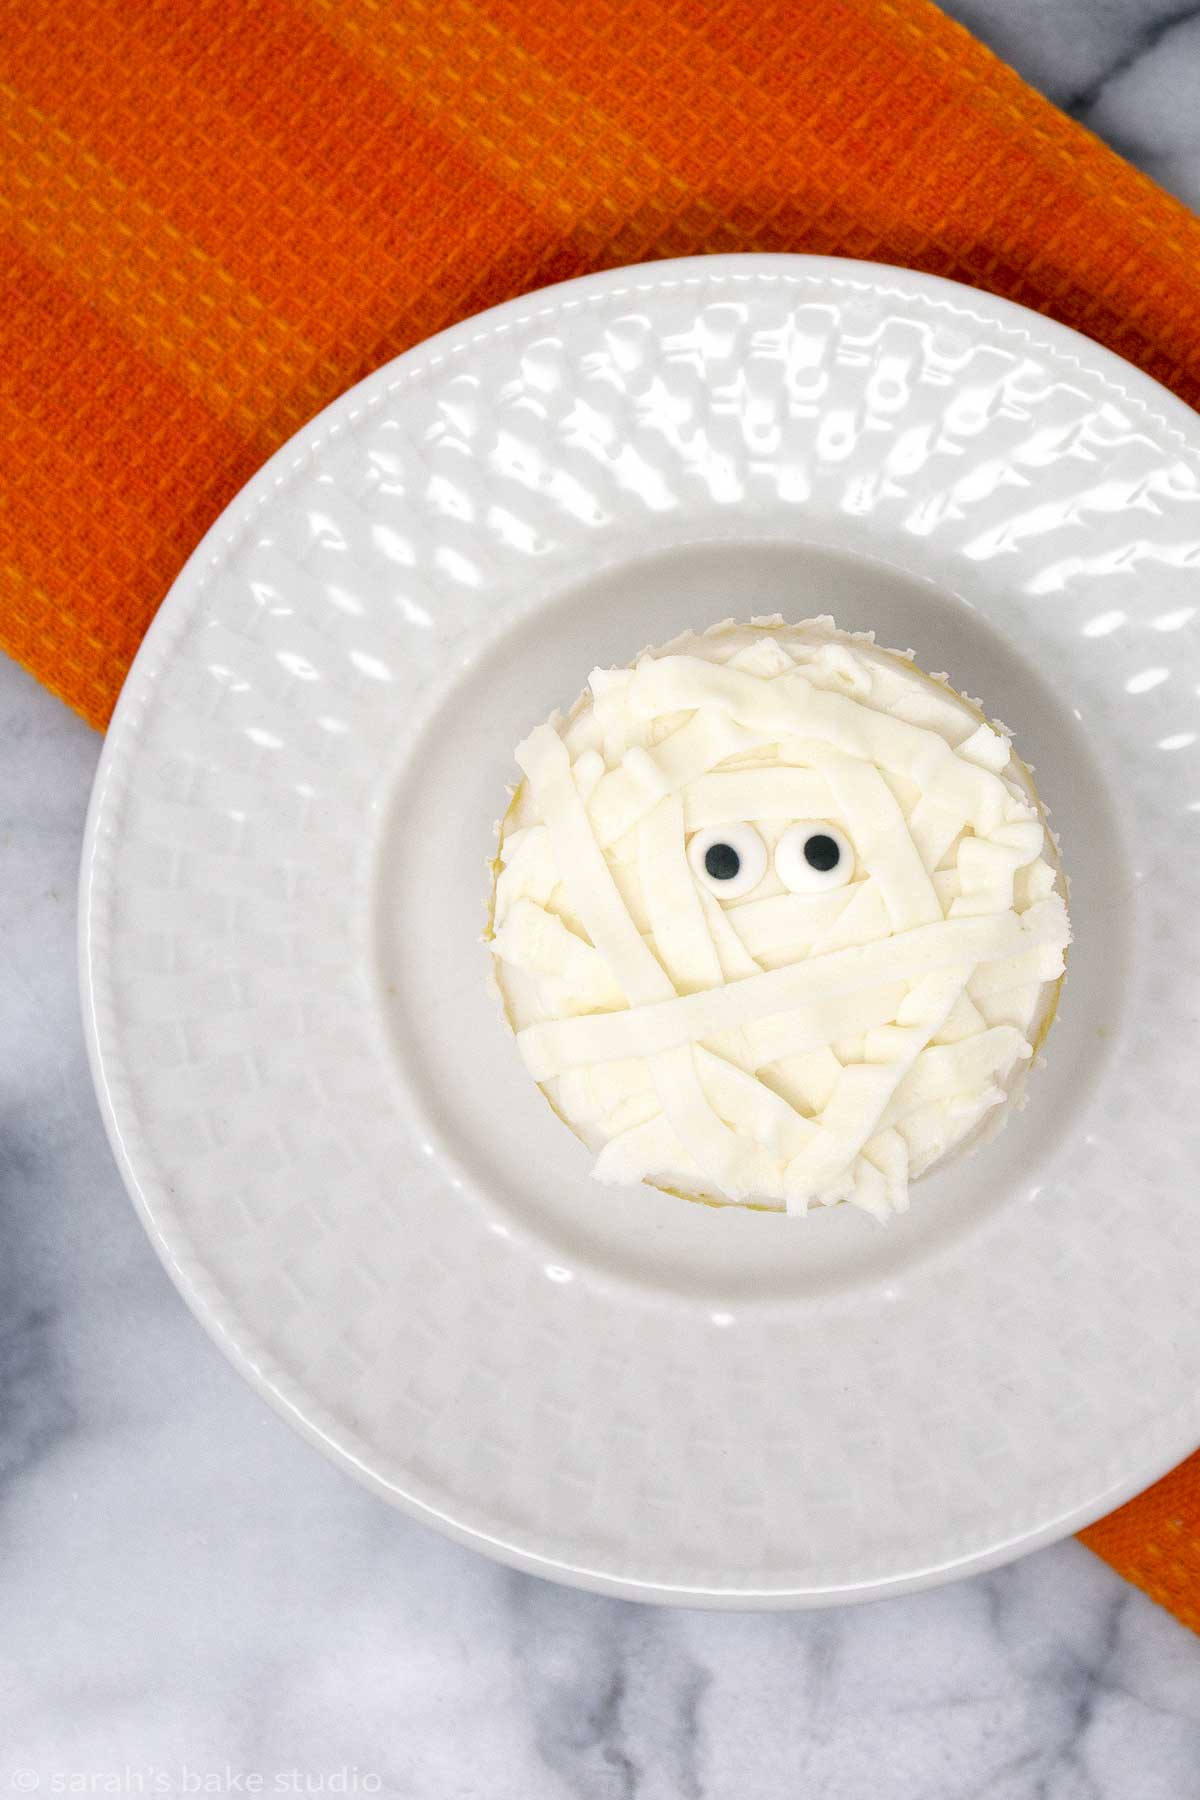 a single halloween mummy cupcake on a white plate.